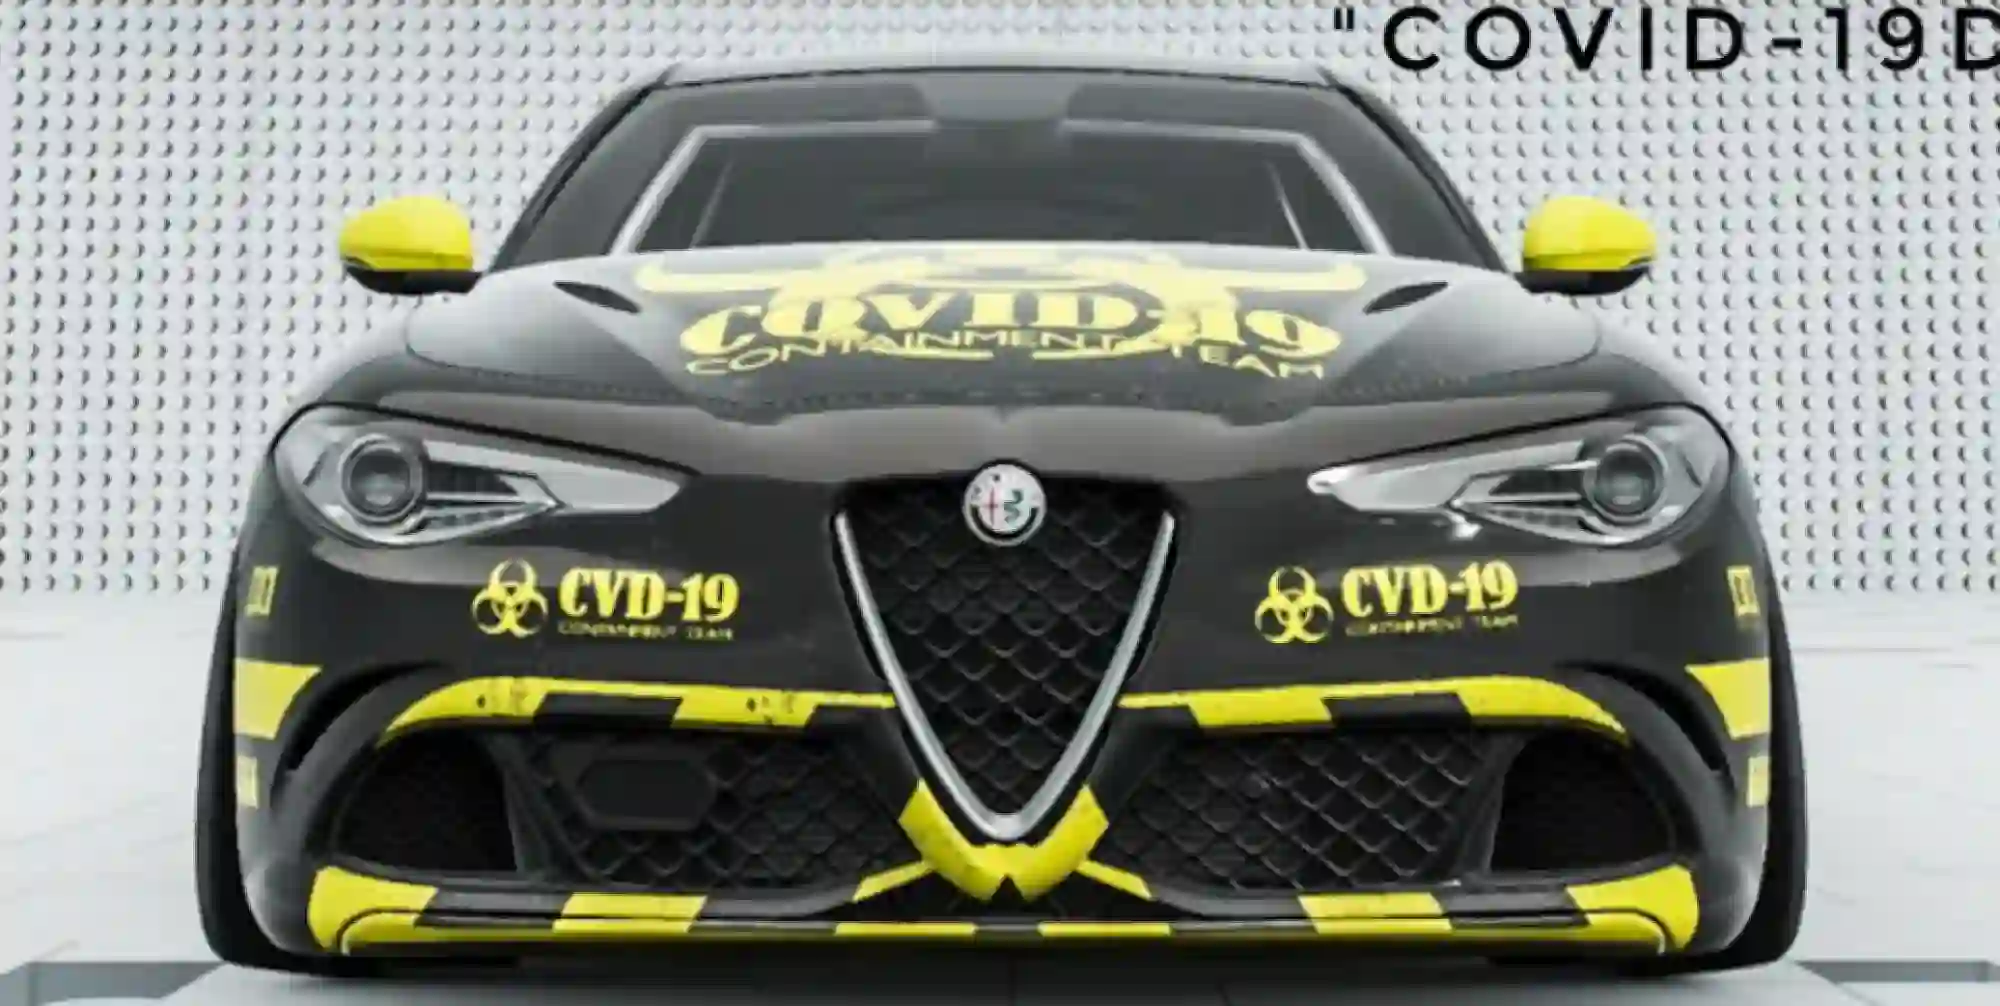 Alfa Romeo Giulia - Forza Horizon - Livrea Covid-19 - 3